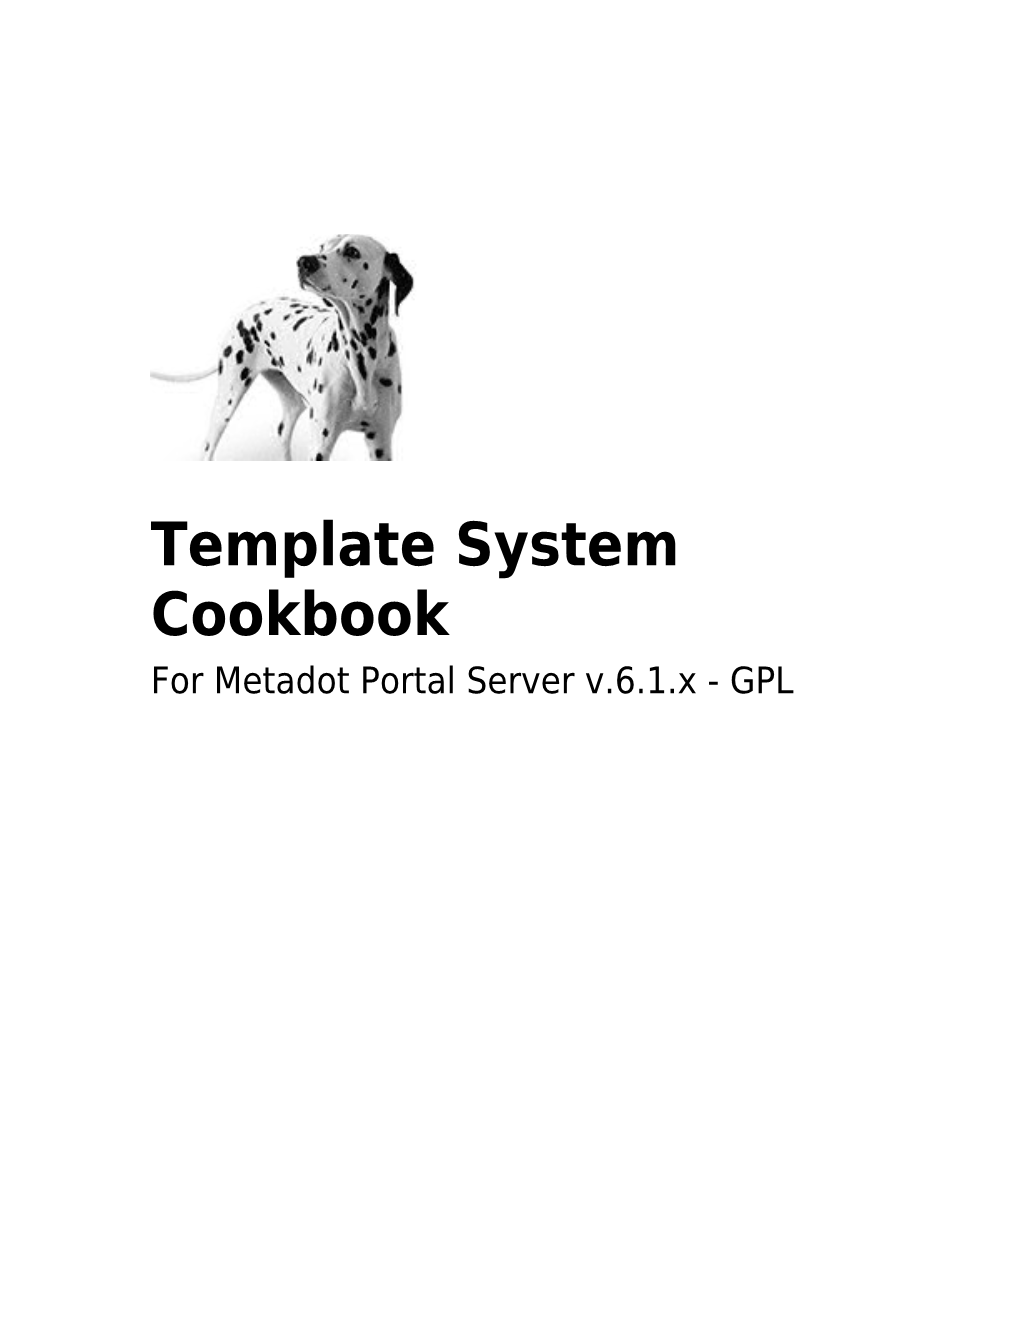 Template System Cookbook